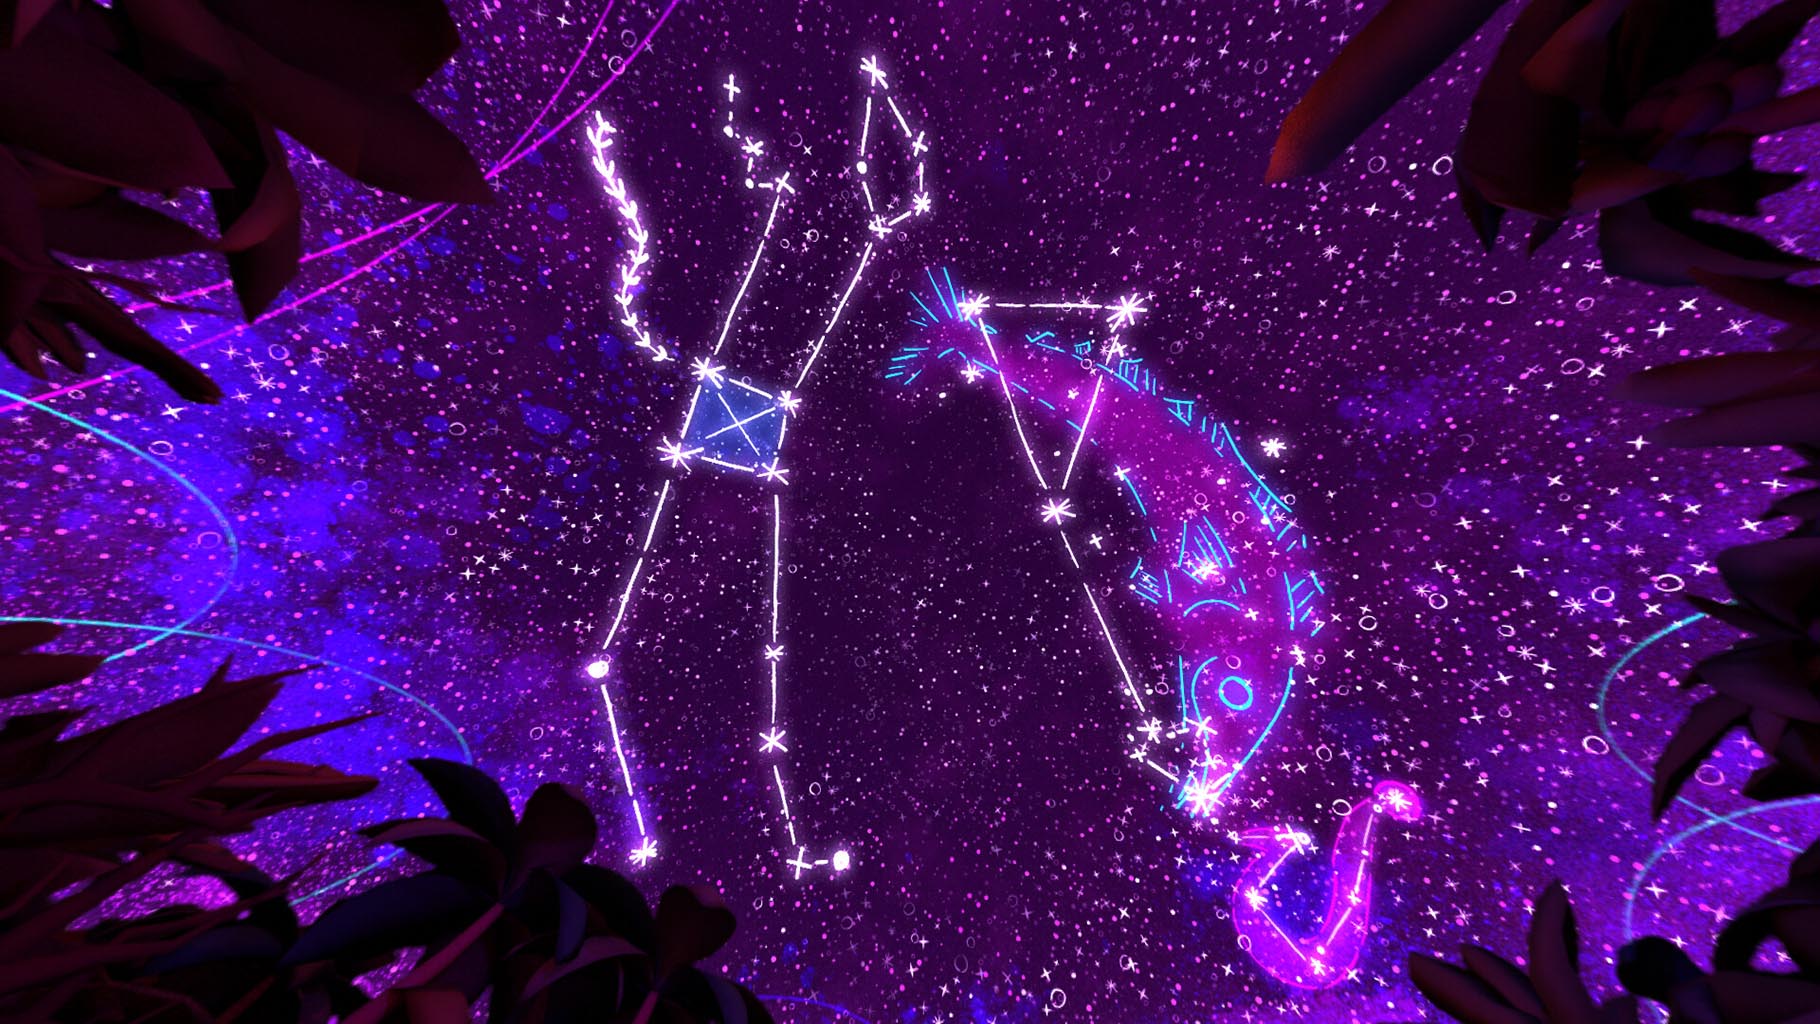 2 constellations dancing in a purple sky